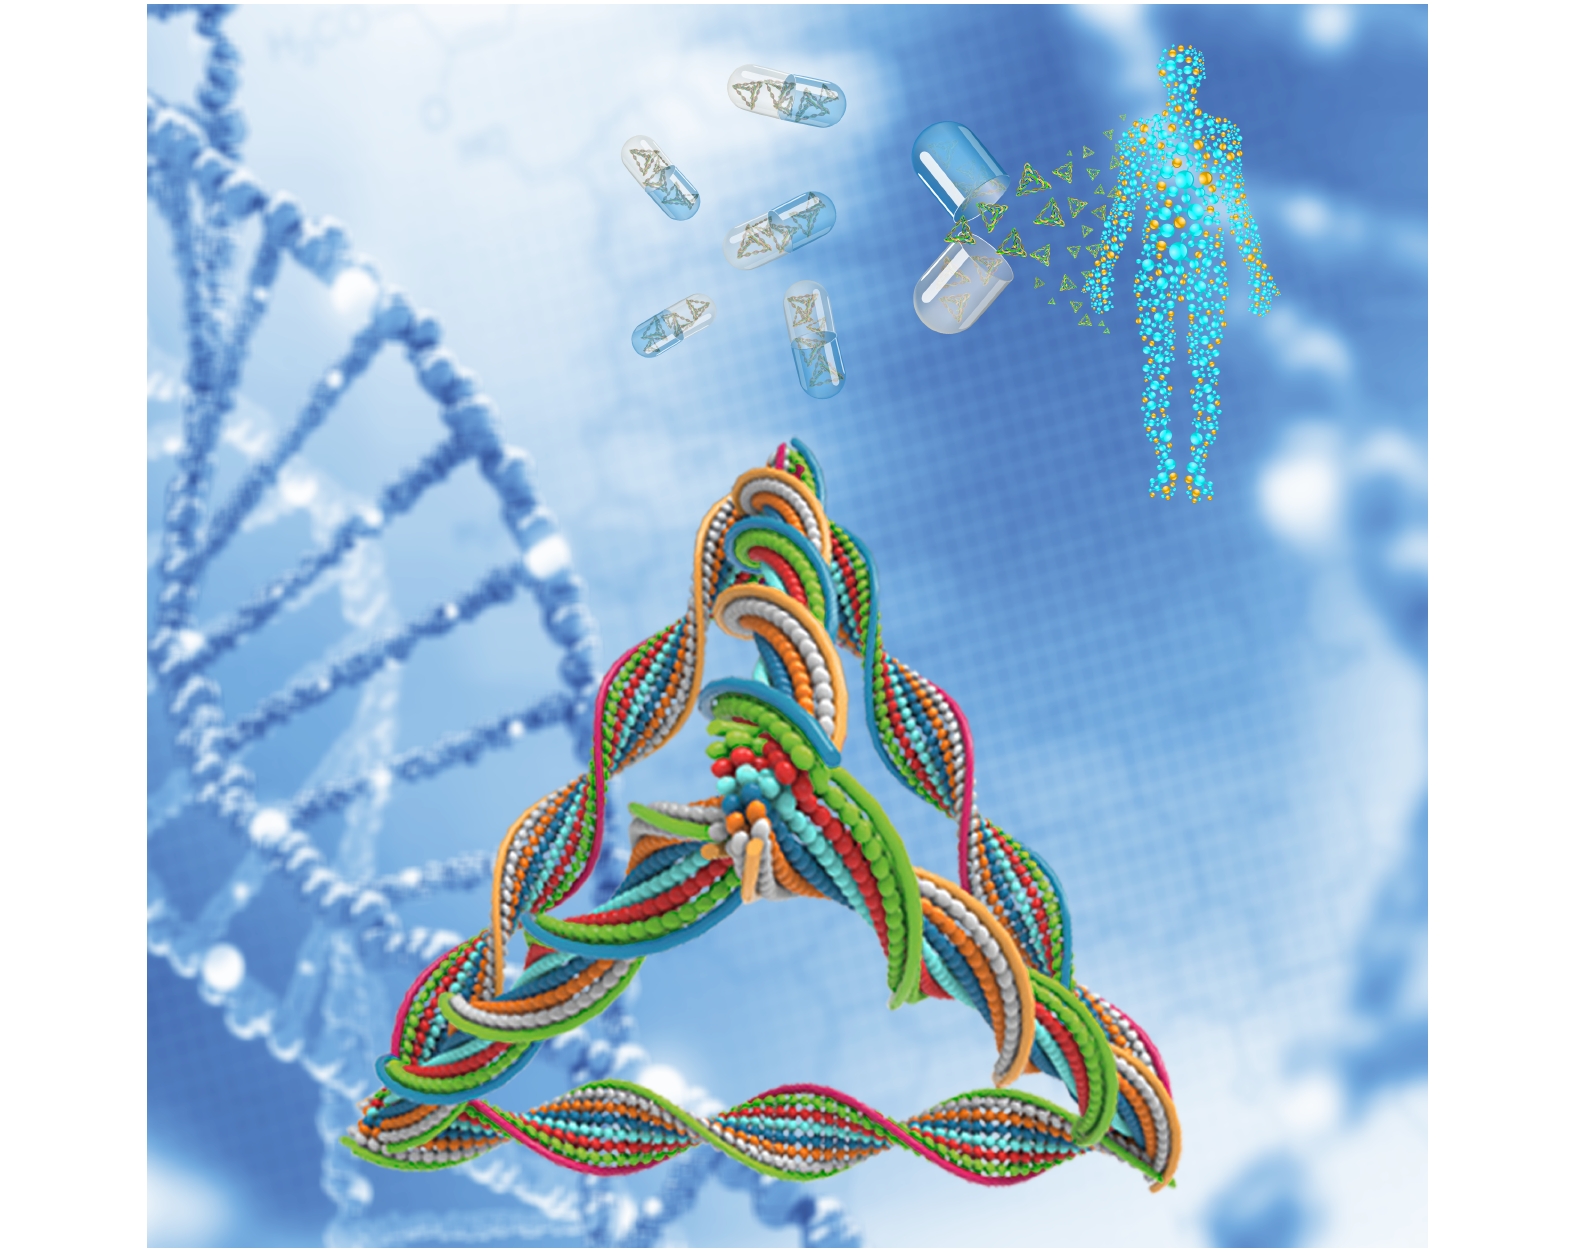 tetrahedral framework nucleic acids and human